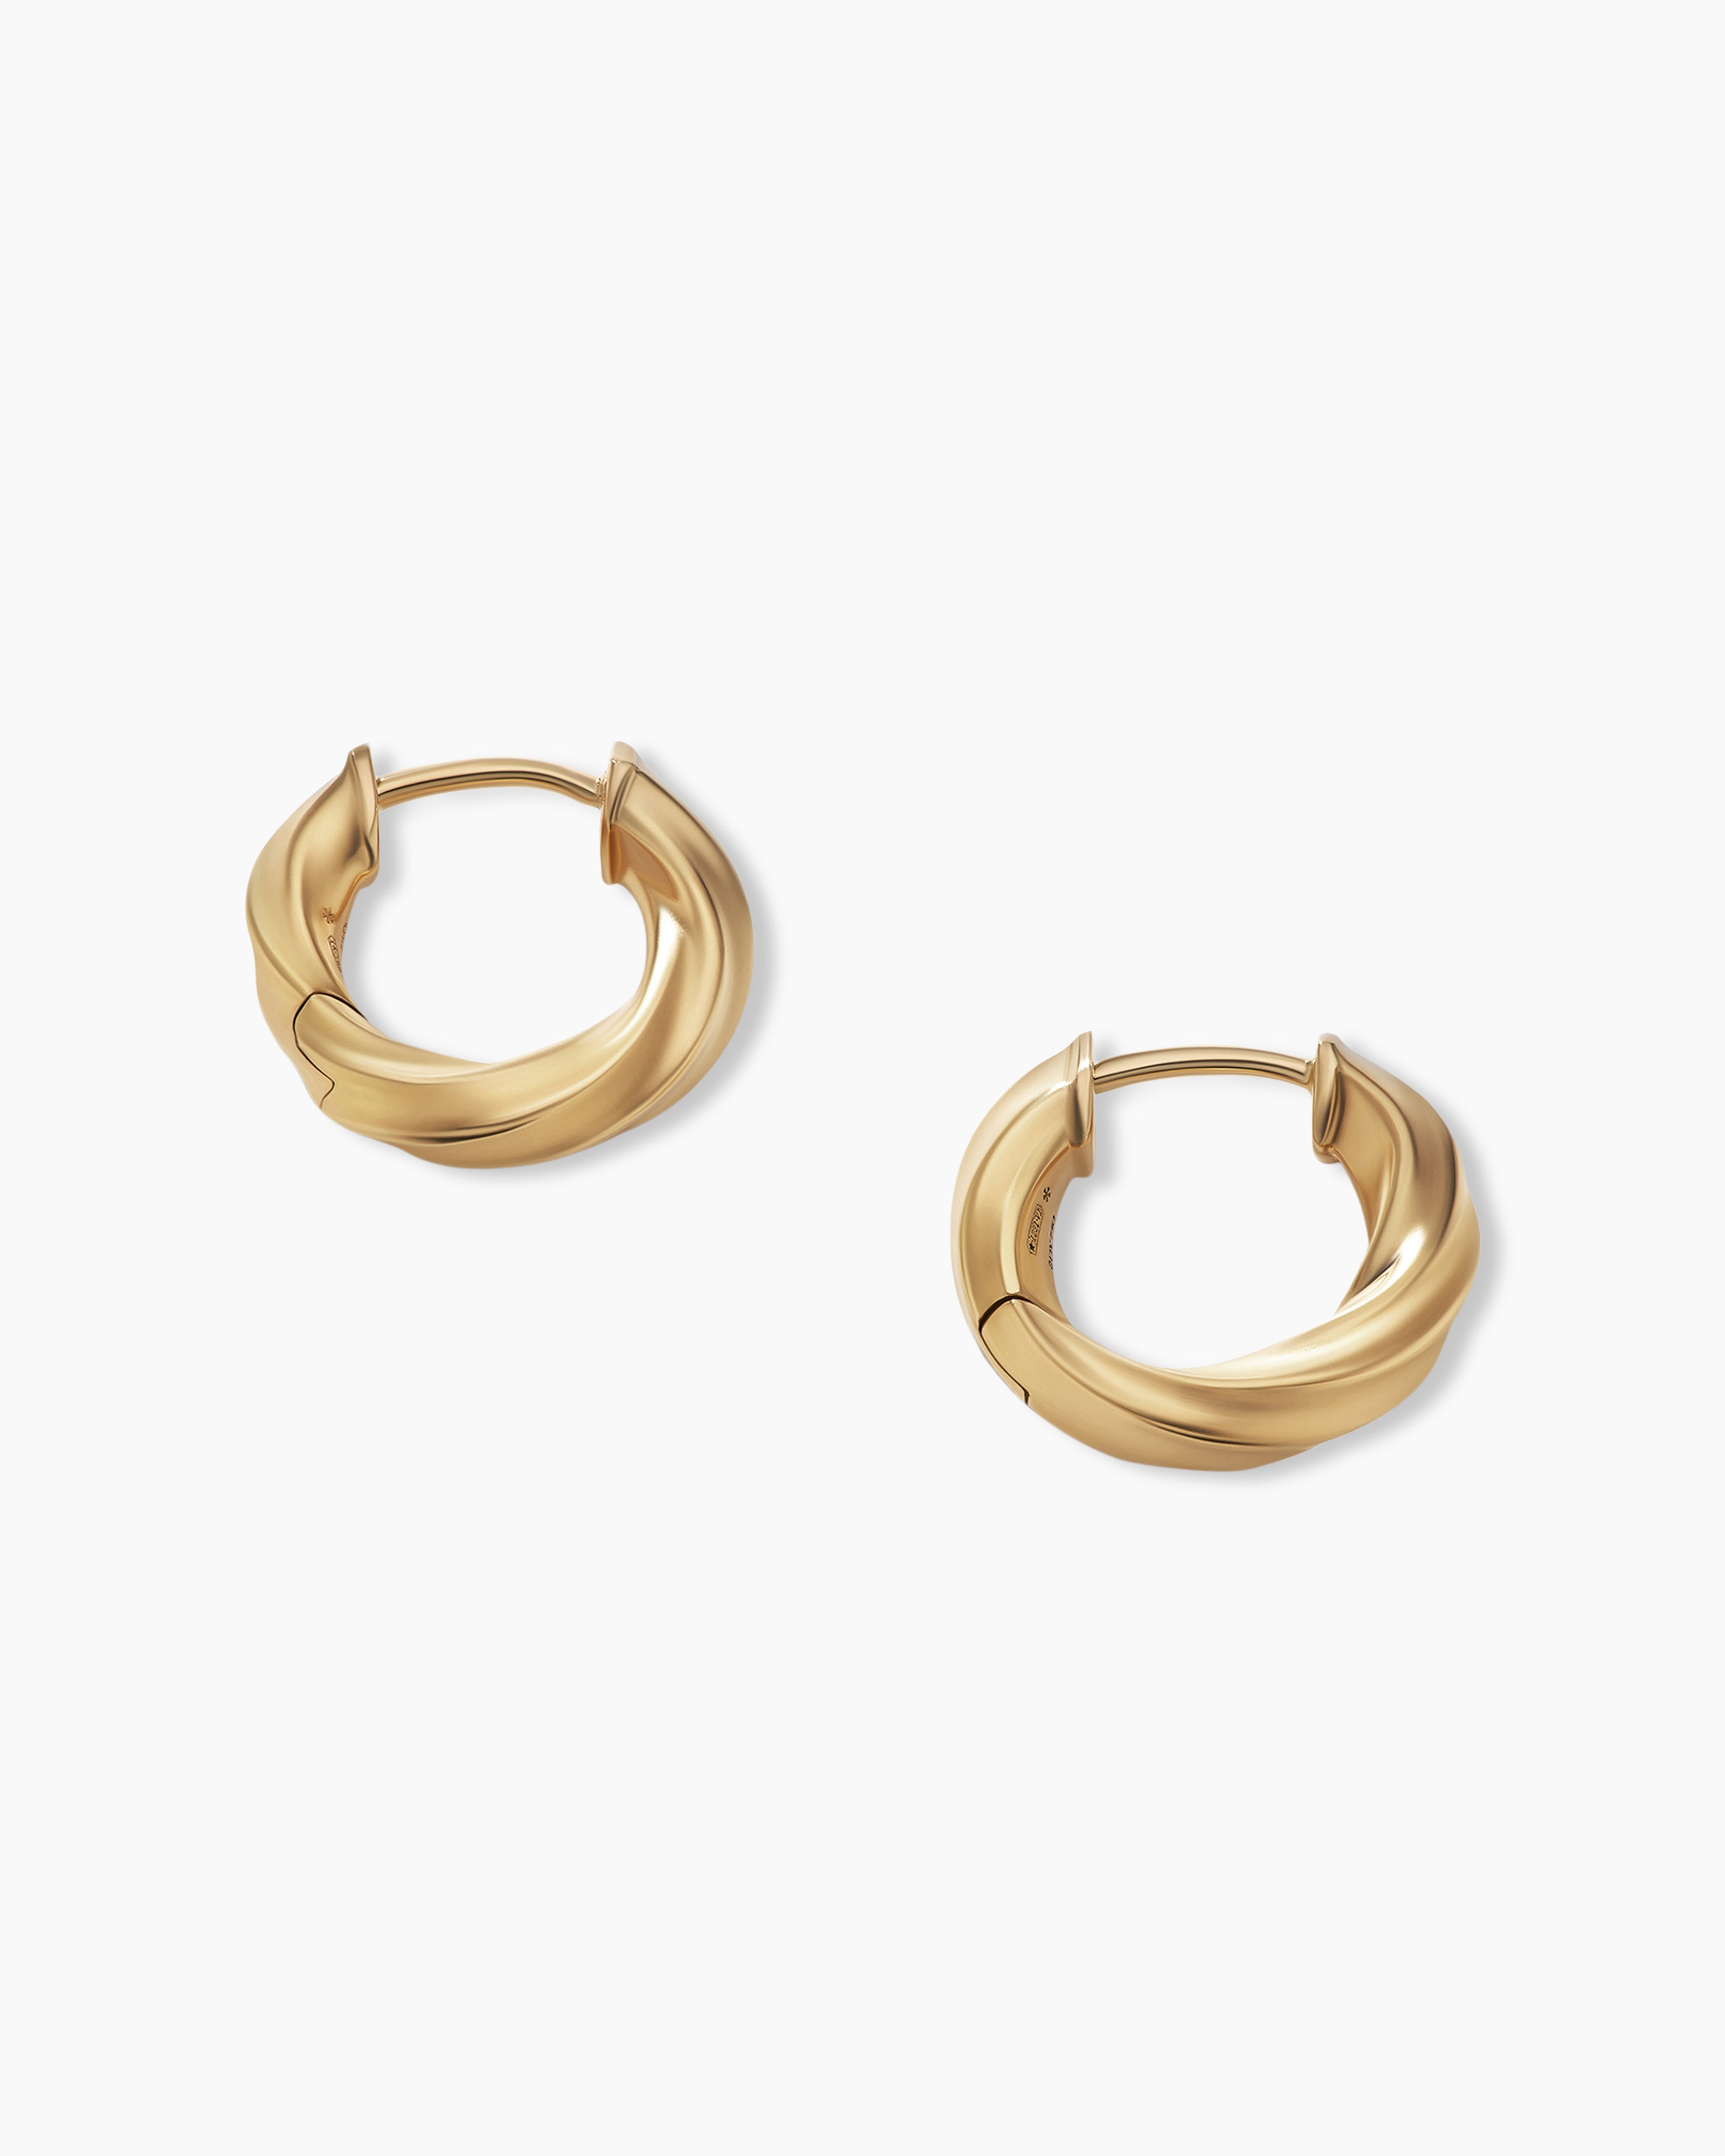 LV EDGE EARRINGS Gold/Silver  Gold earrings, Gold jewelry, Silver jewelry